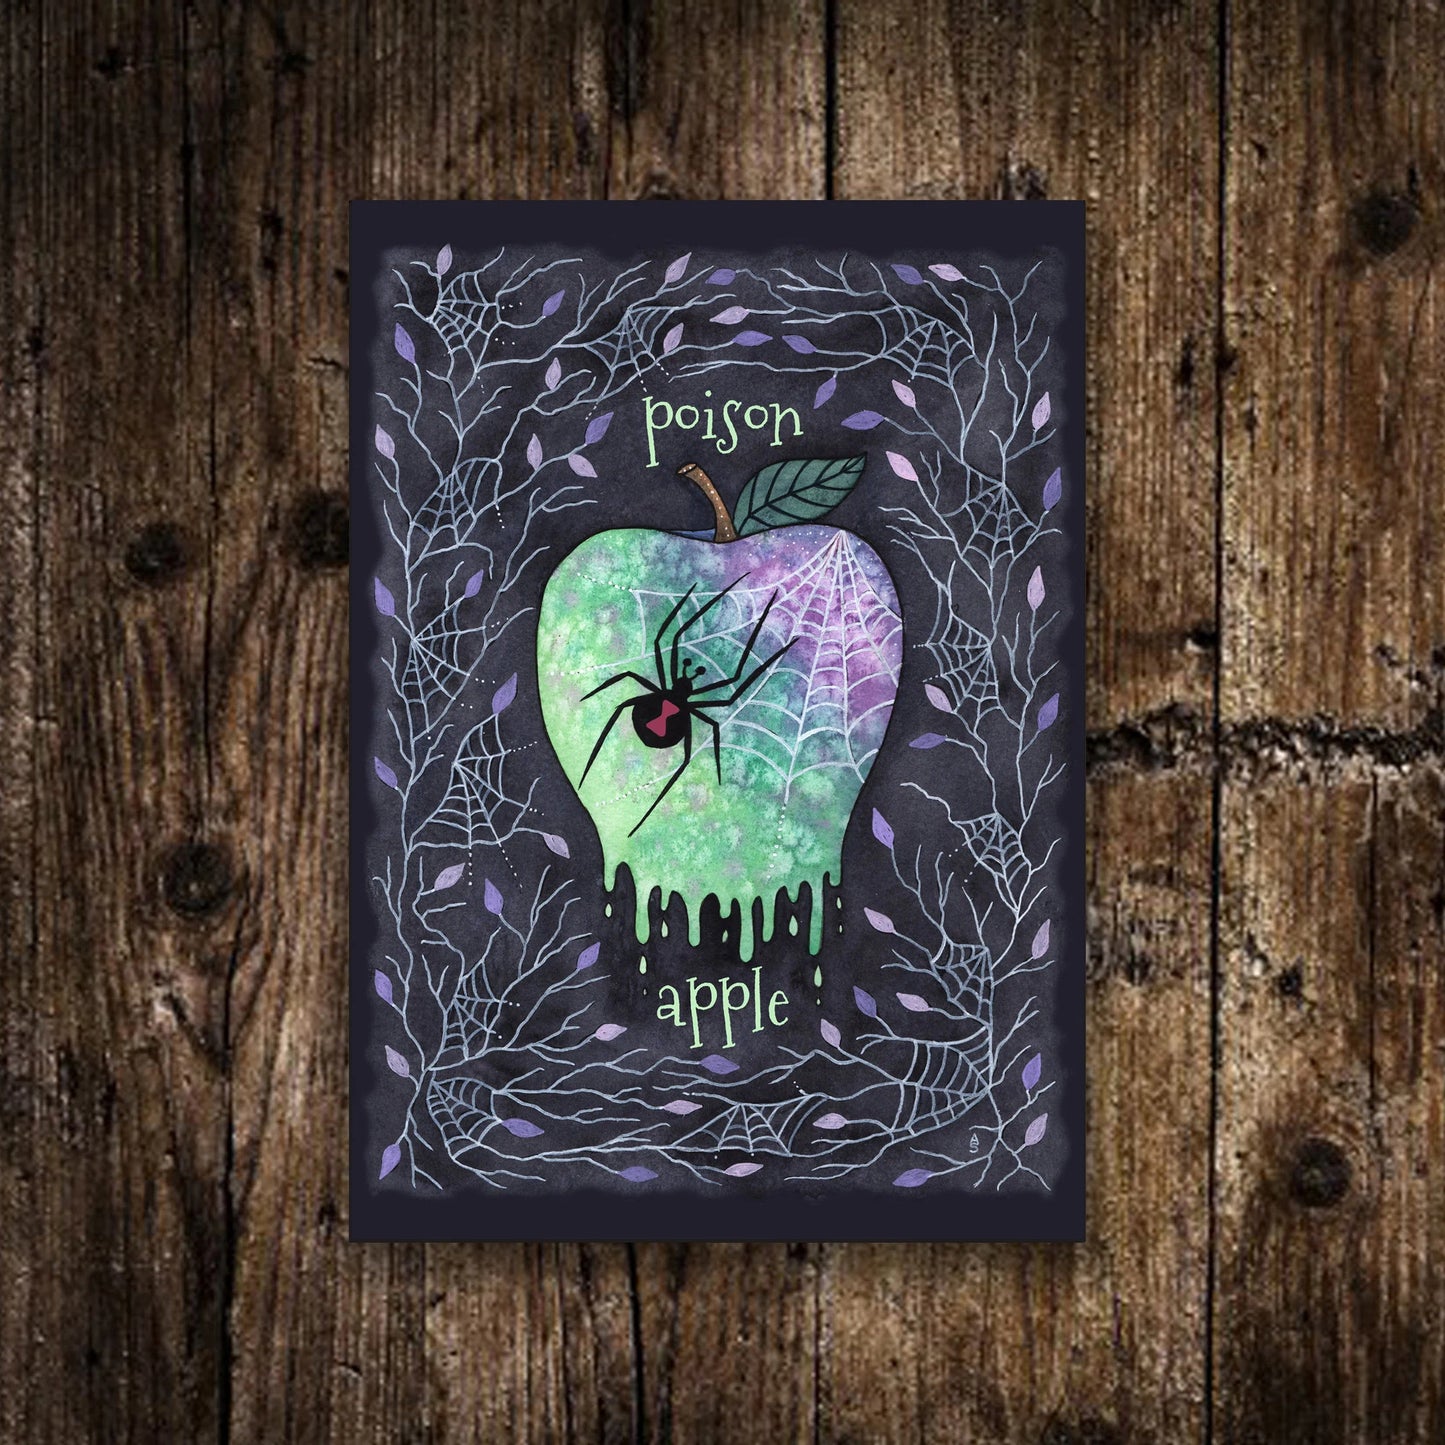 Mini Poison Apple Print - Small A6 Spooky Poisonous Spider Apple Illustration - Spooky Creepy Black Widow Spider Halloween Cobweb Decoration